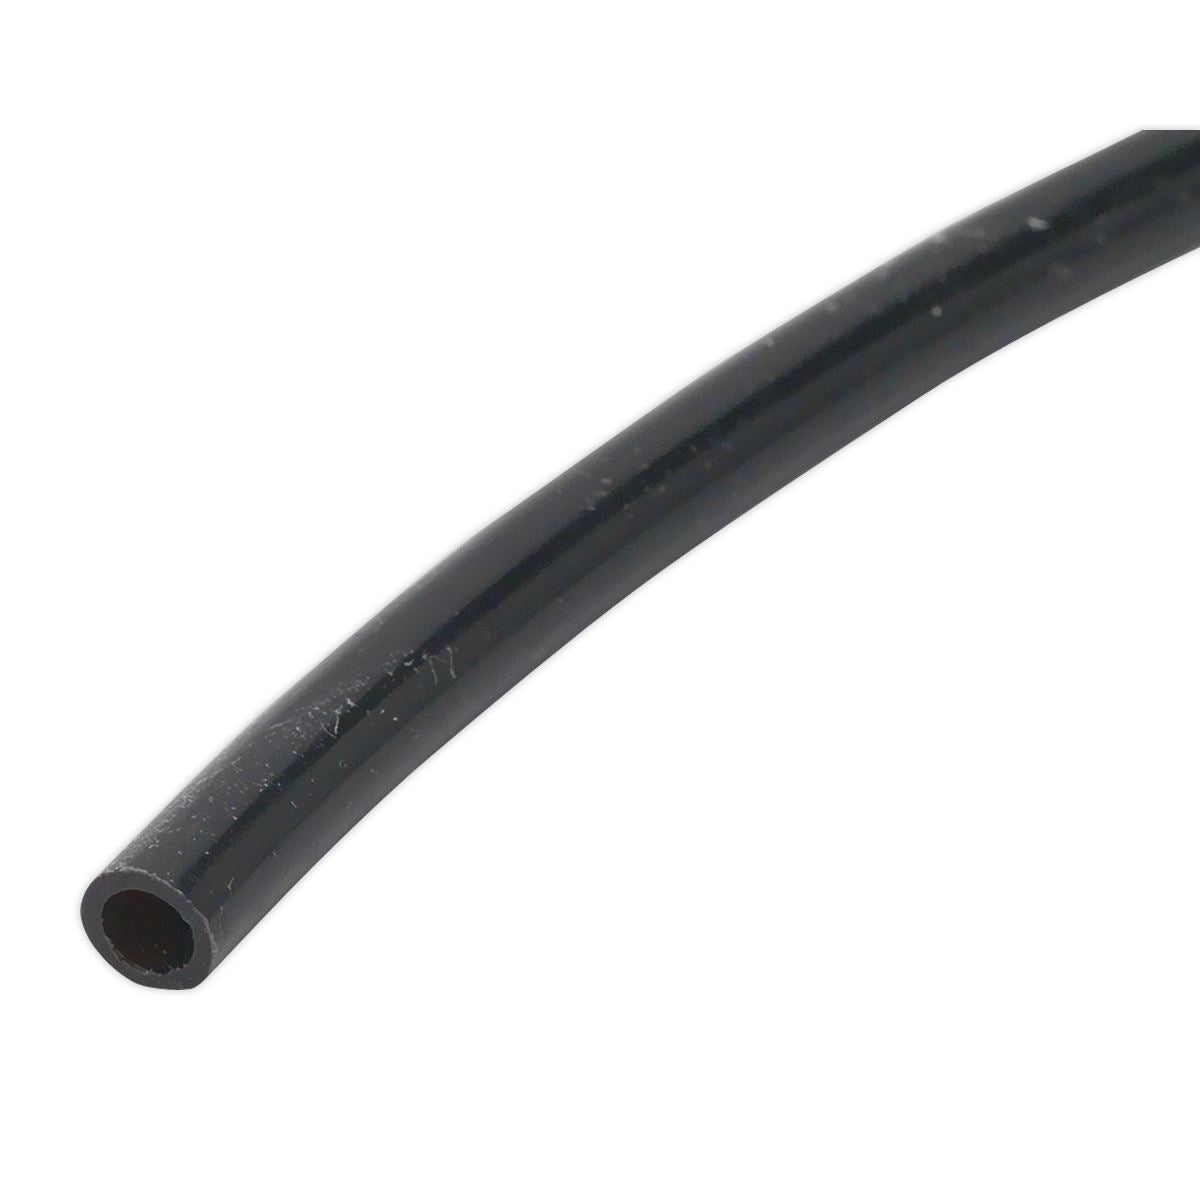 Sealey Polyethylene Tubing 6mm x 100m Black (John Guest Speedfit®)